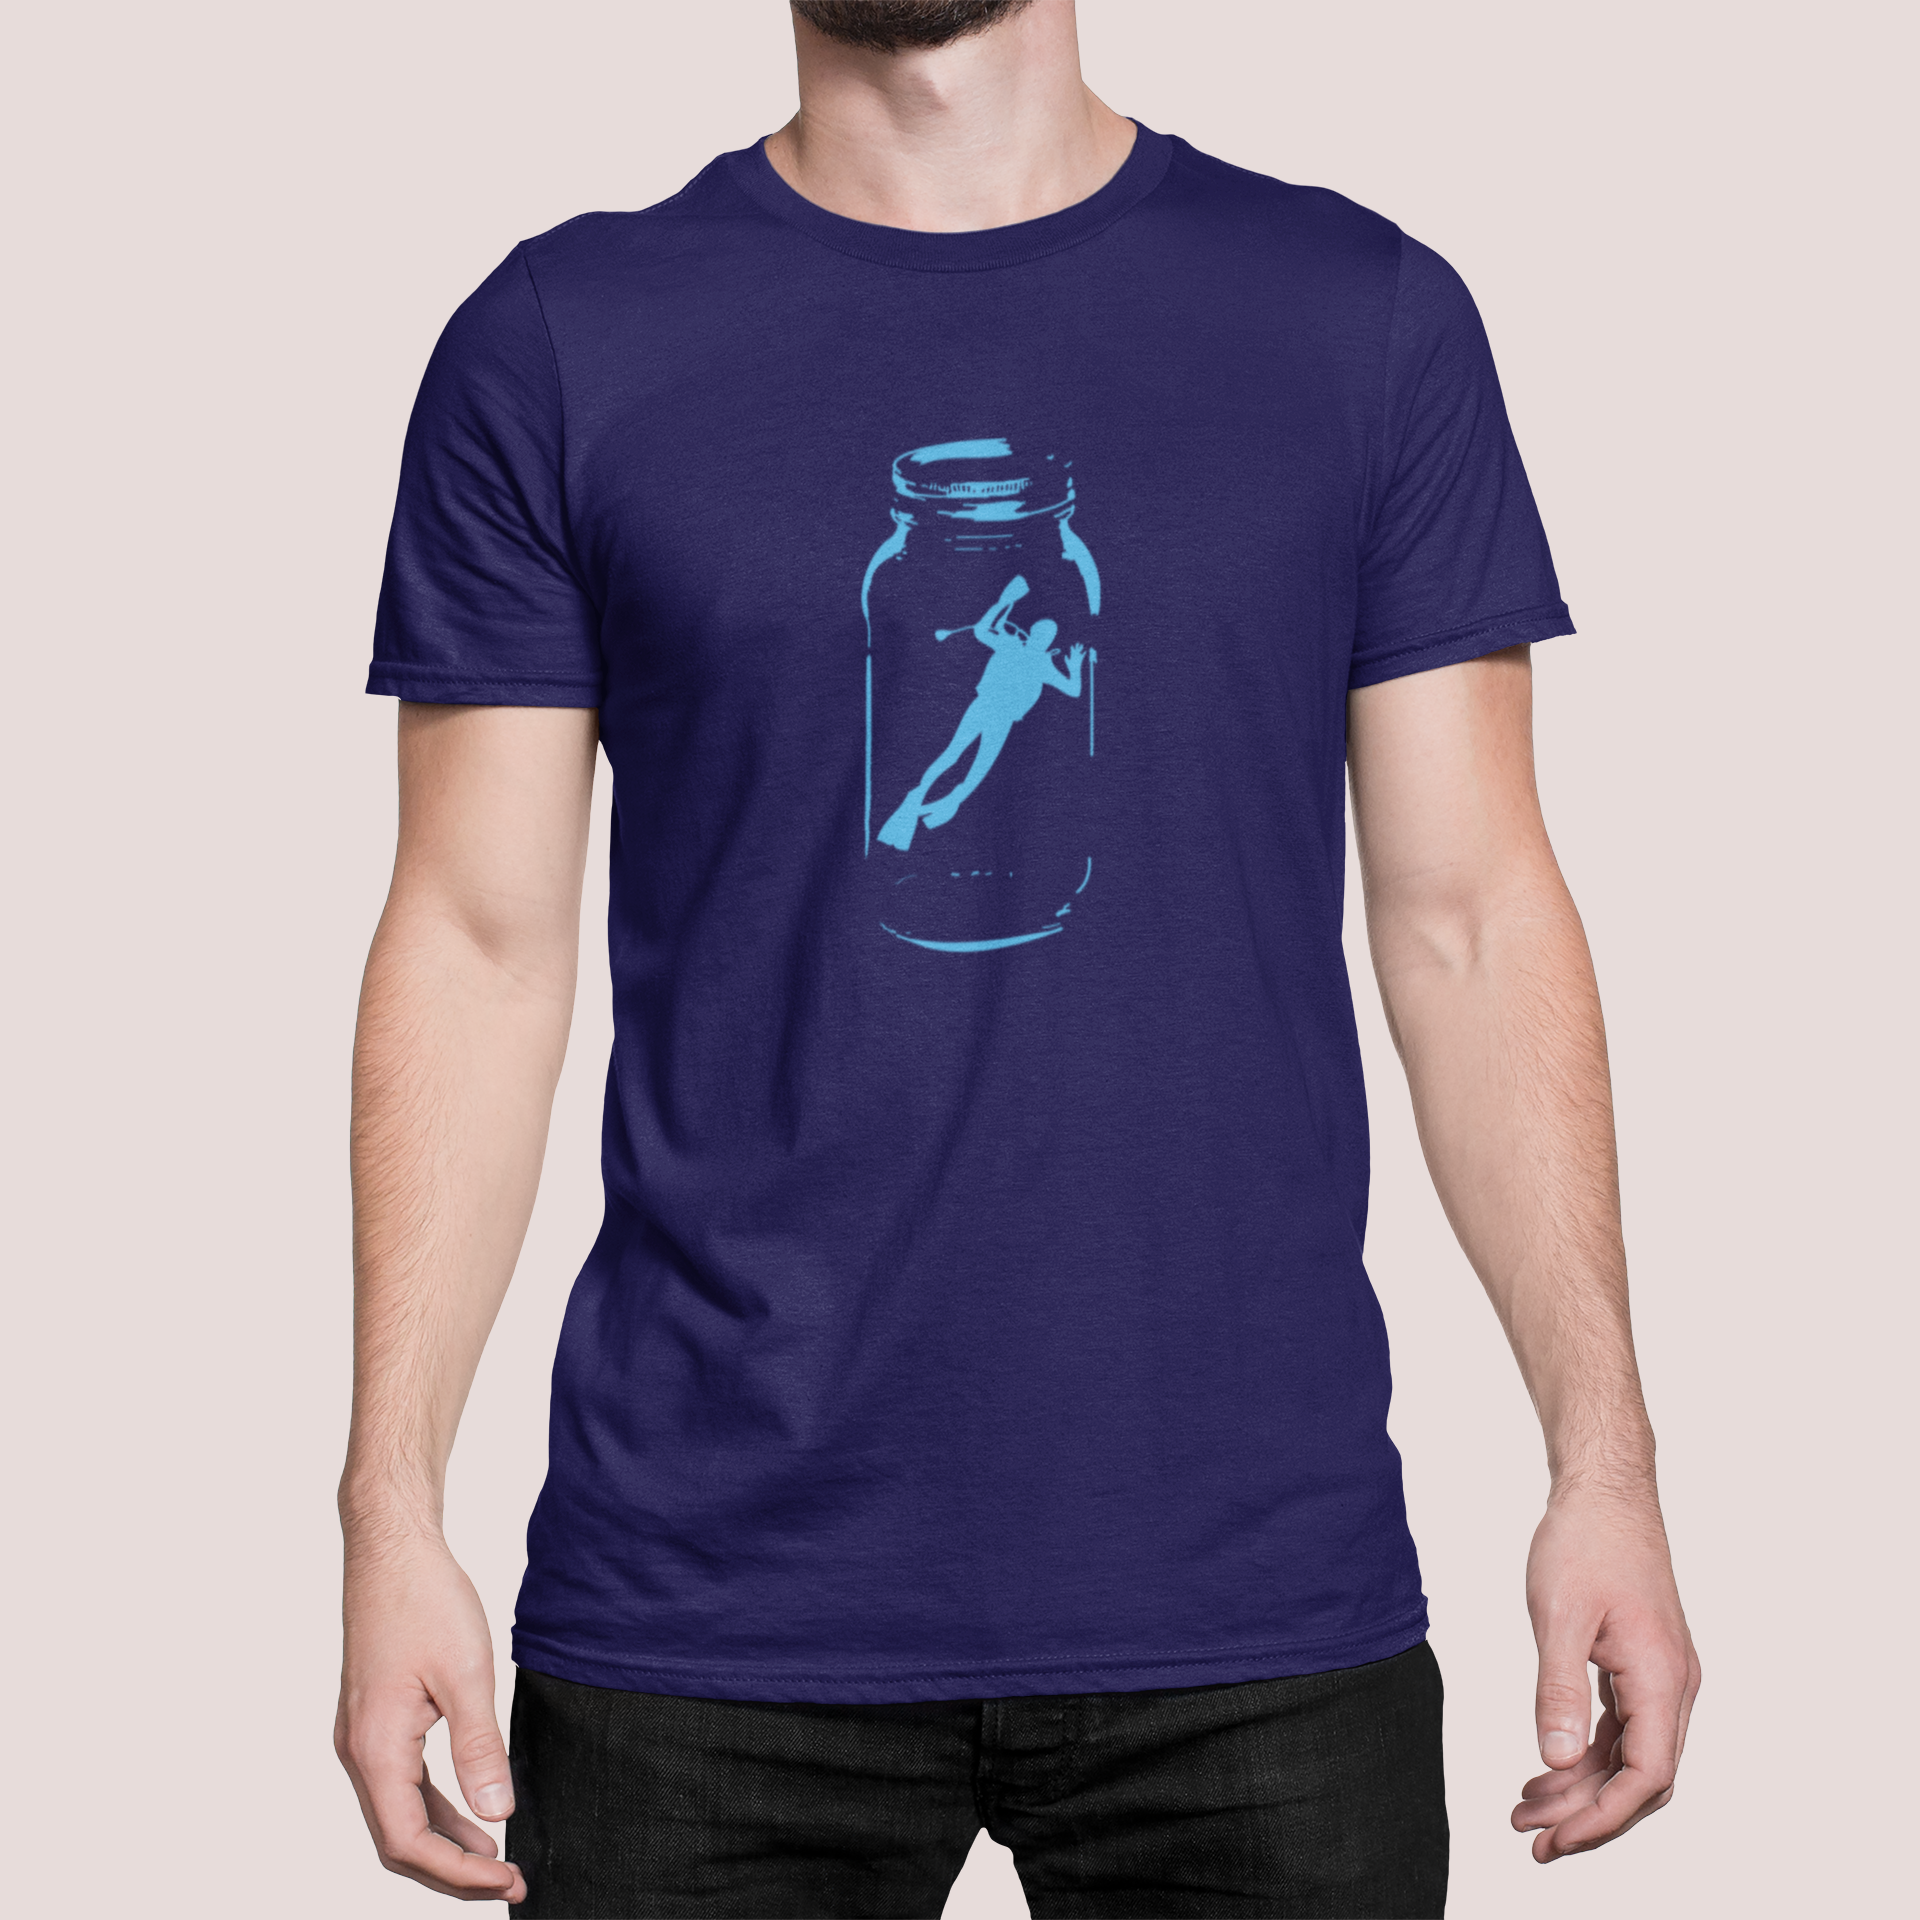 Diver in jar - Men's/Unisex T-Shirt